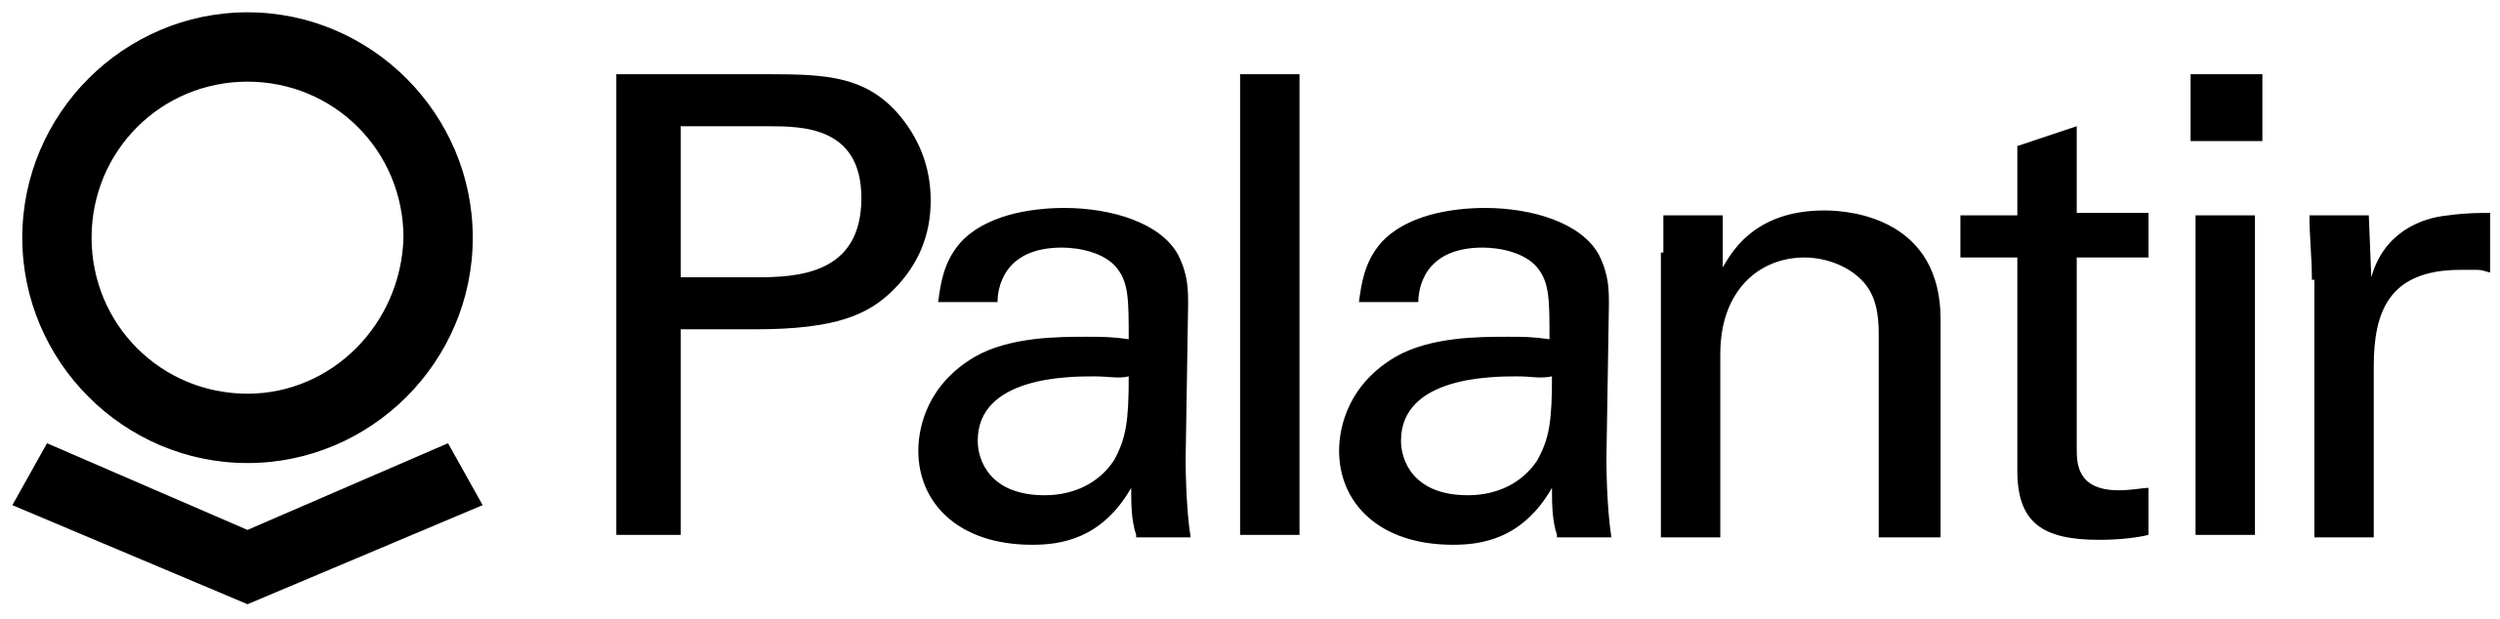 Palantir_Technologies_logo.svg.png